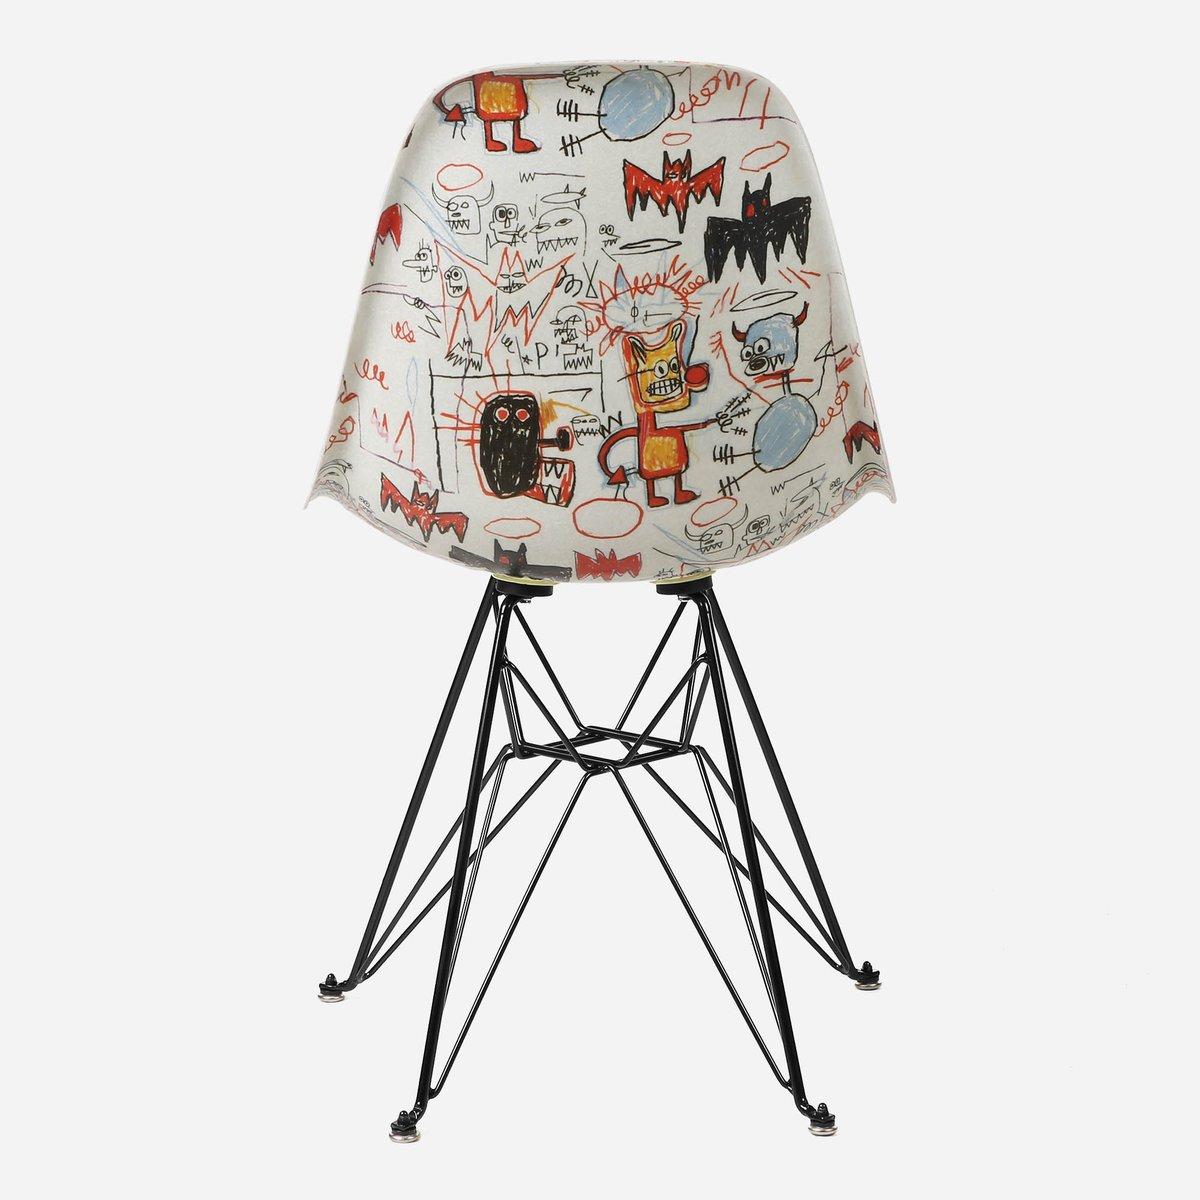 Case Study Furniture® Chair (Bats)
Fiberglass Side Shell Eiffel Chair by Modernica
32 H x 18.5 W x 21 D inches
seat height: 18